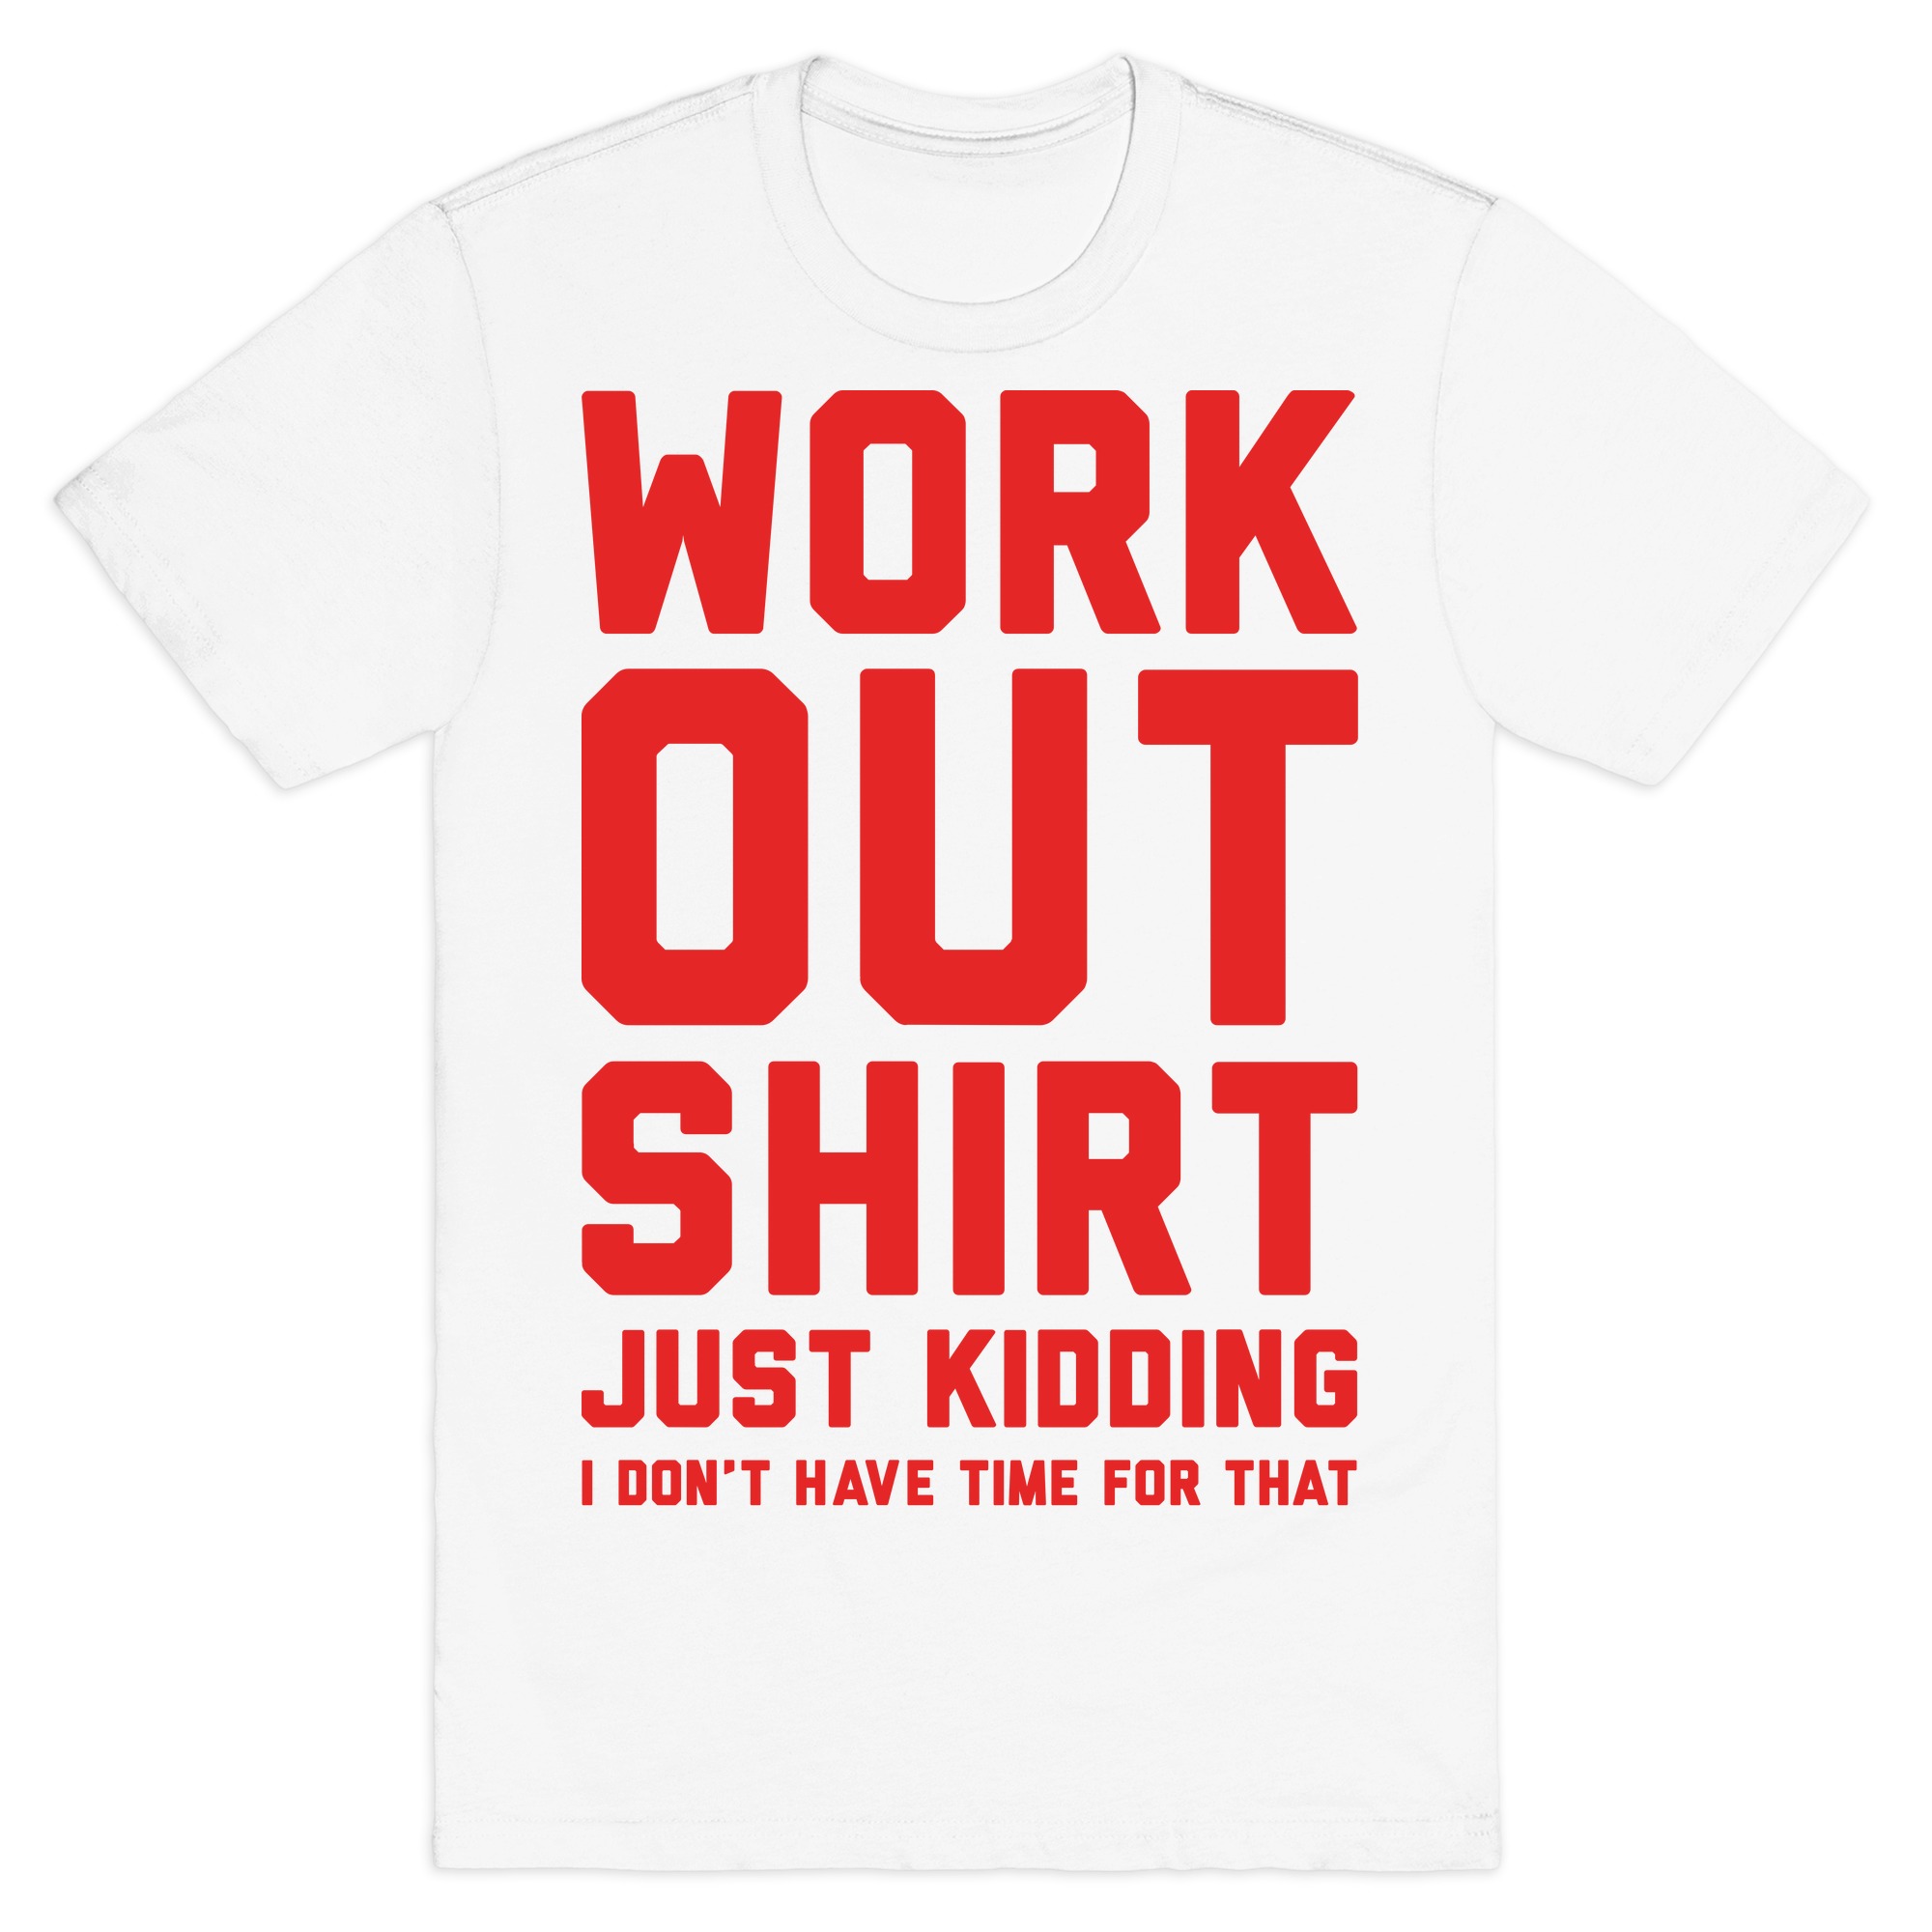 100 cotton workout shirts